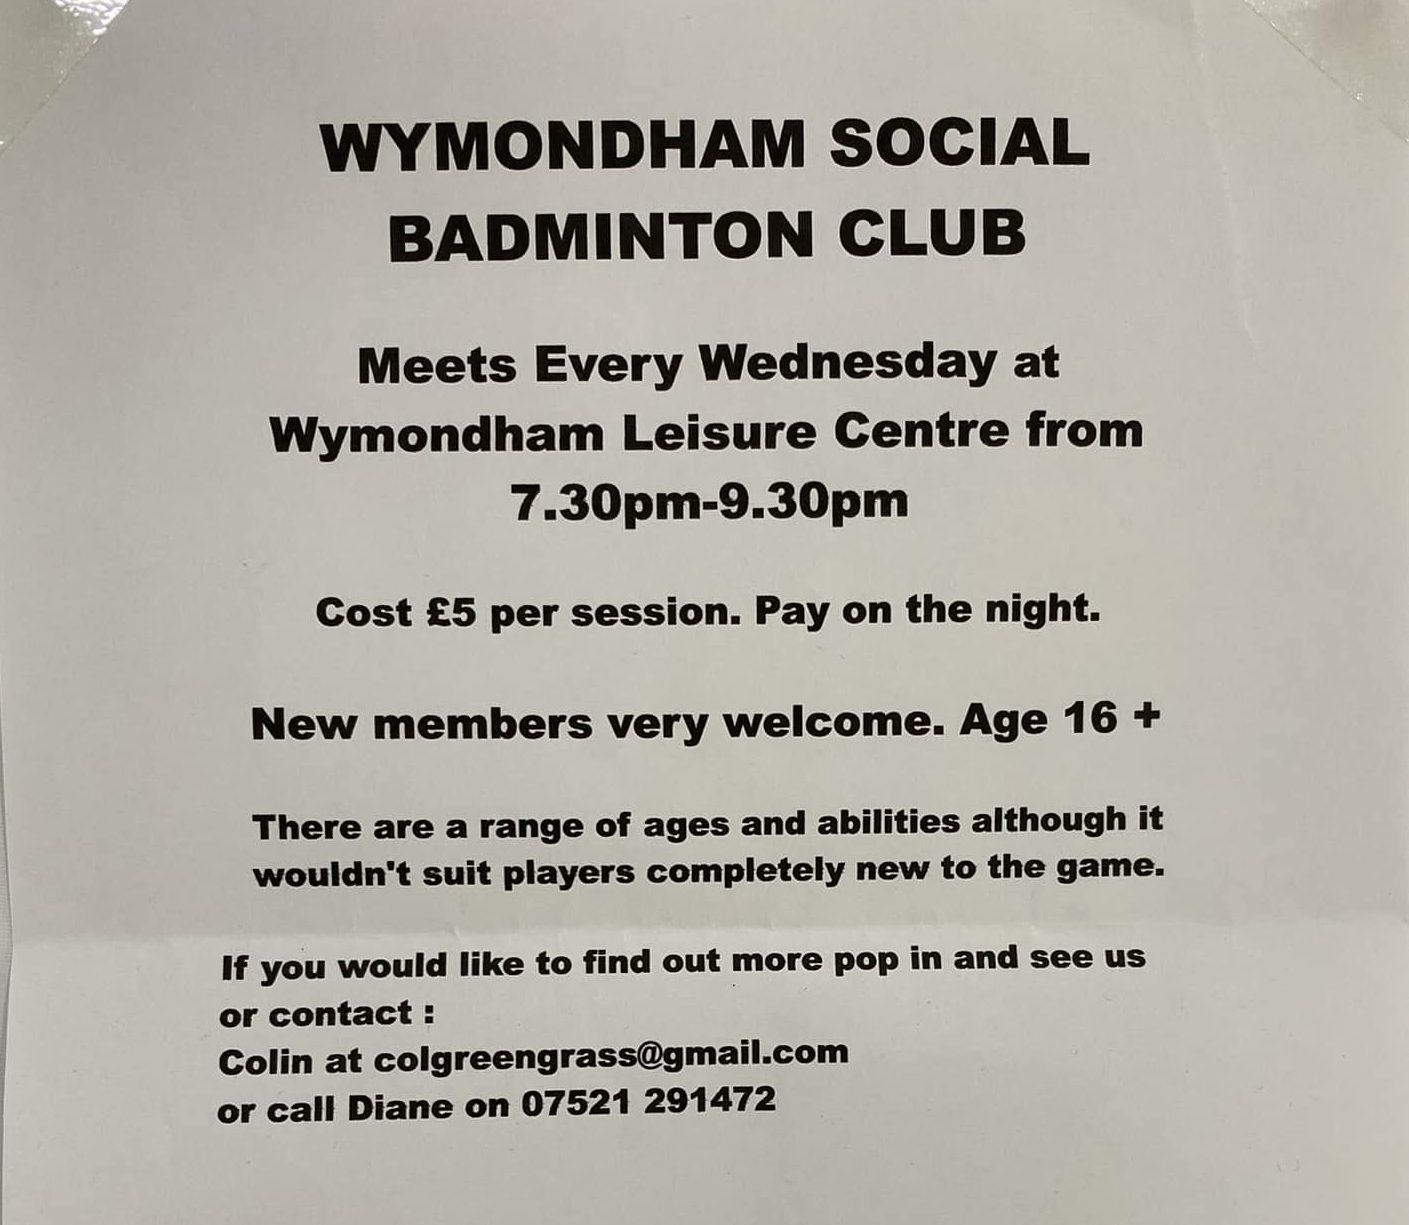 Social Badminton Club – Wymondham Leisure Centre, Wednesday Evenings